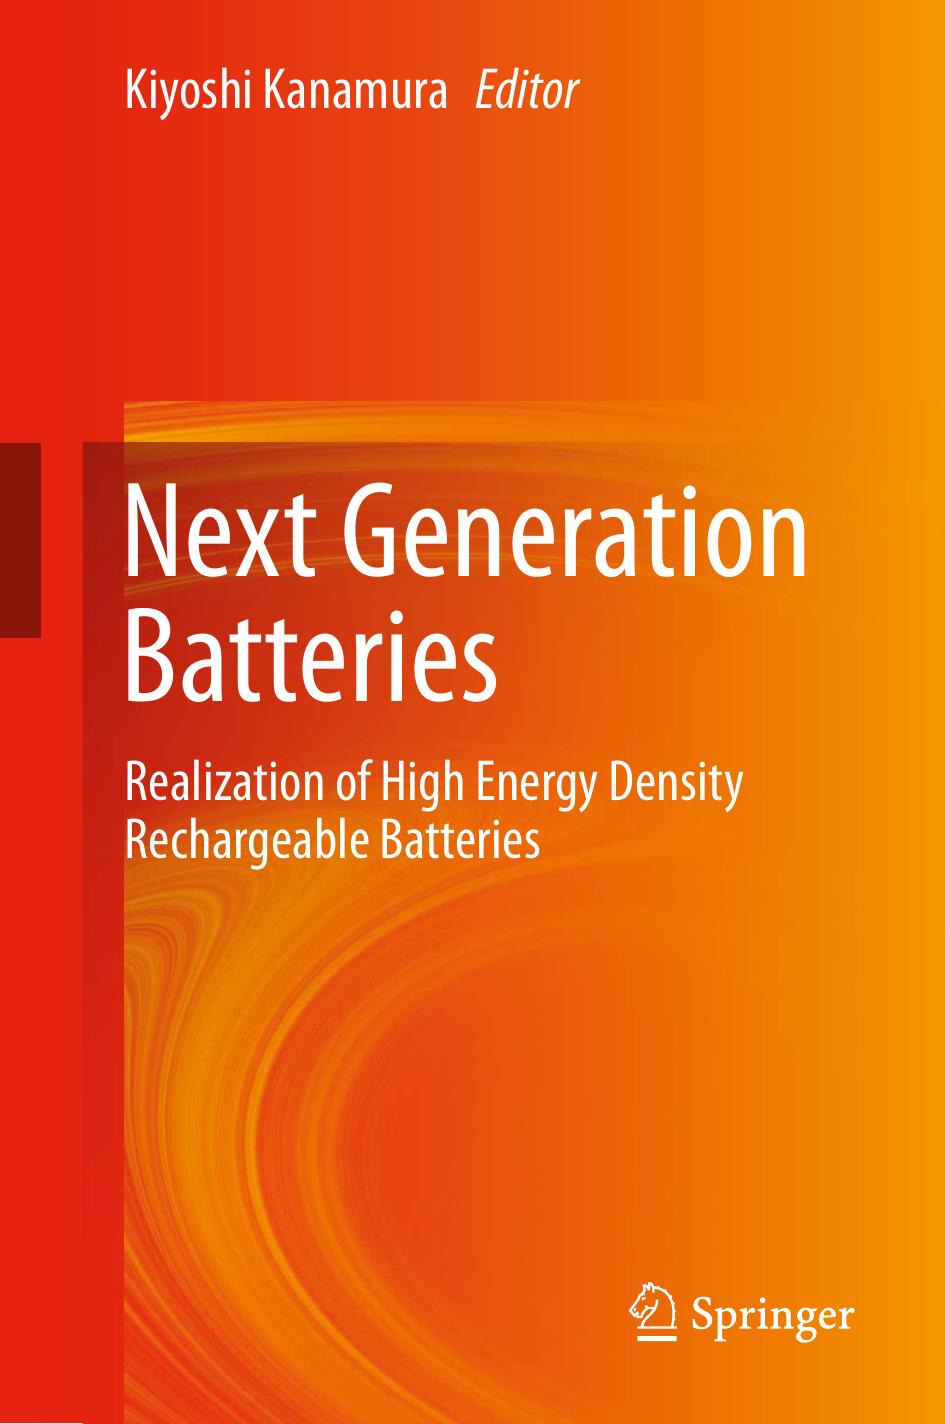 Next Generation Batteries: Realization of High Energy Density Rechargeable Batteries by Kiyoshi Kanamura (editor)